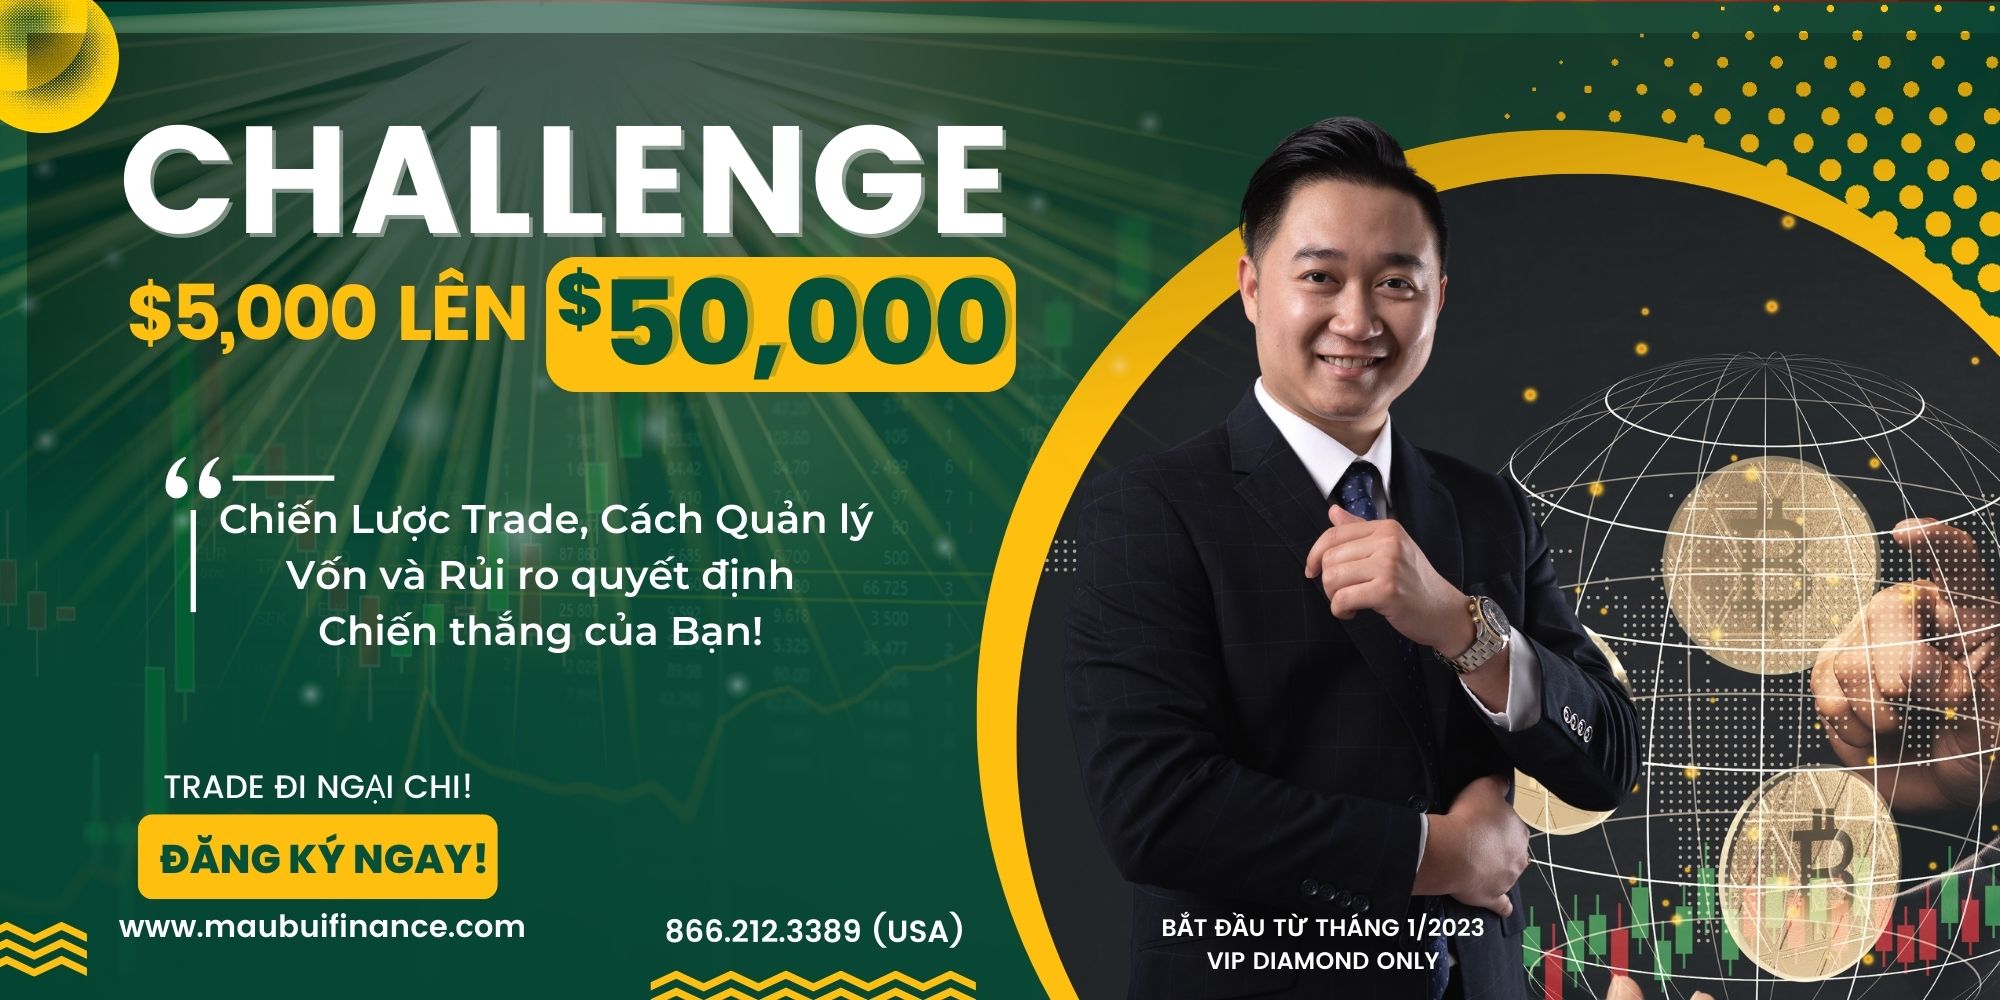 maubuifinance challenge 5000 len 50000 - banner